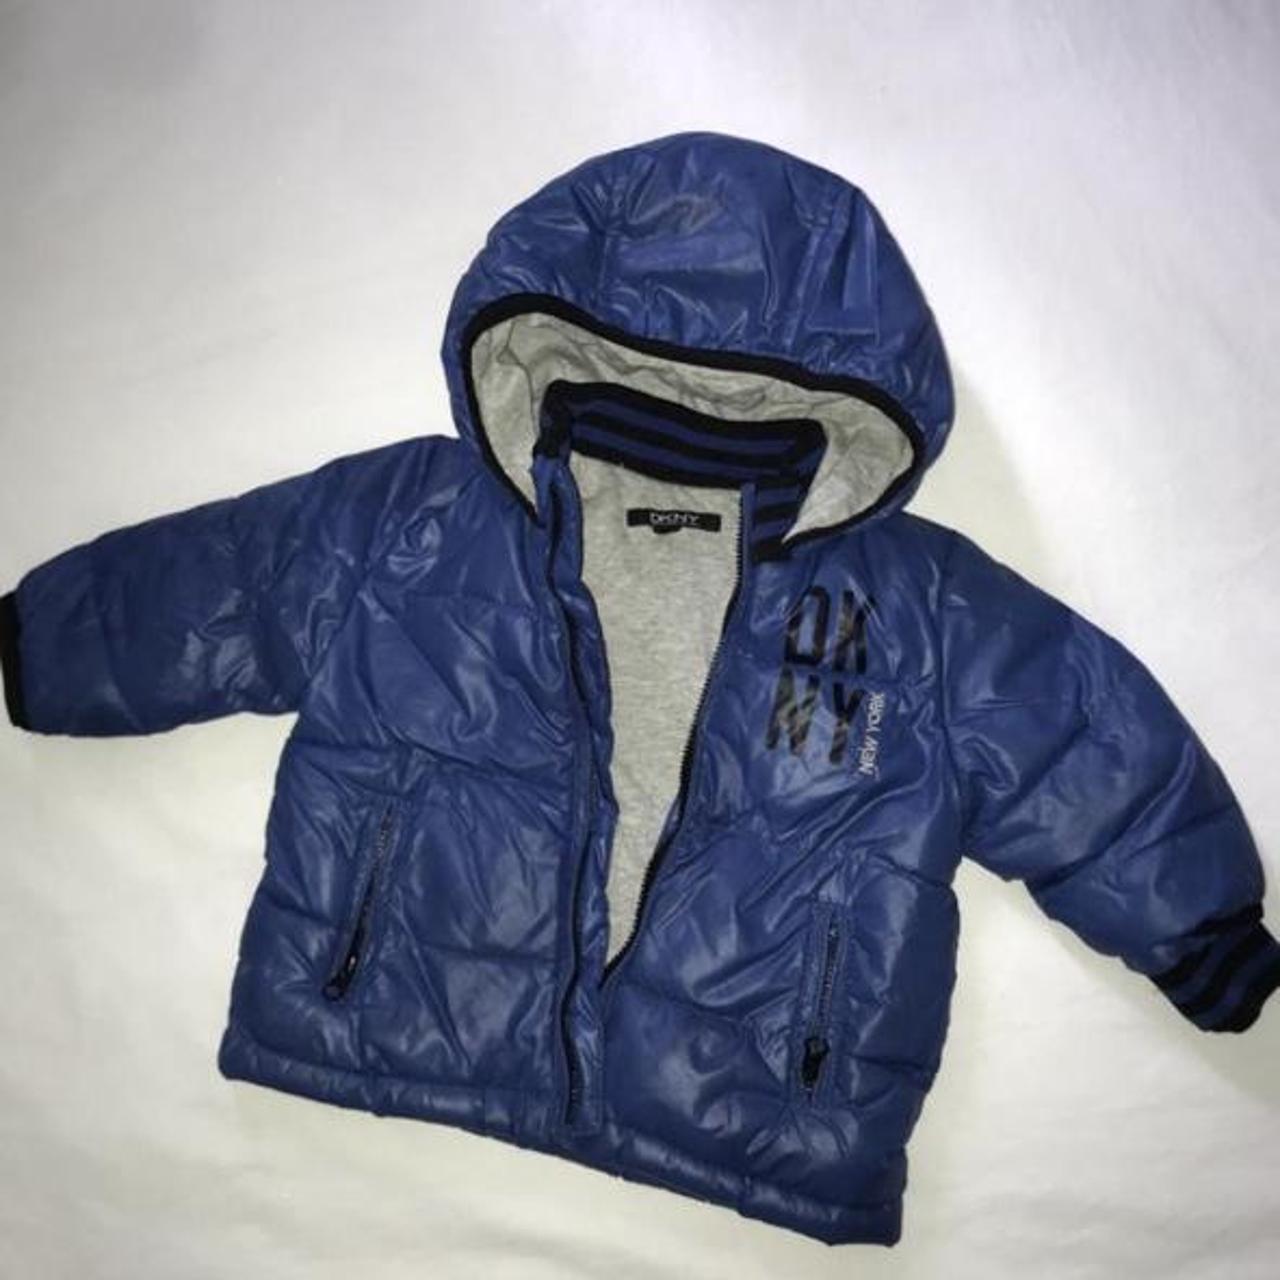 Dkny kids jacket 6 /9moths brand new condition - Depop